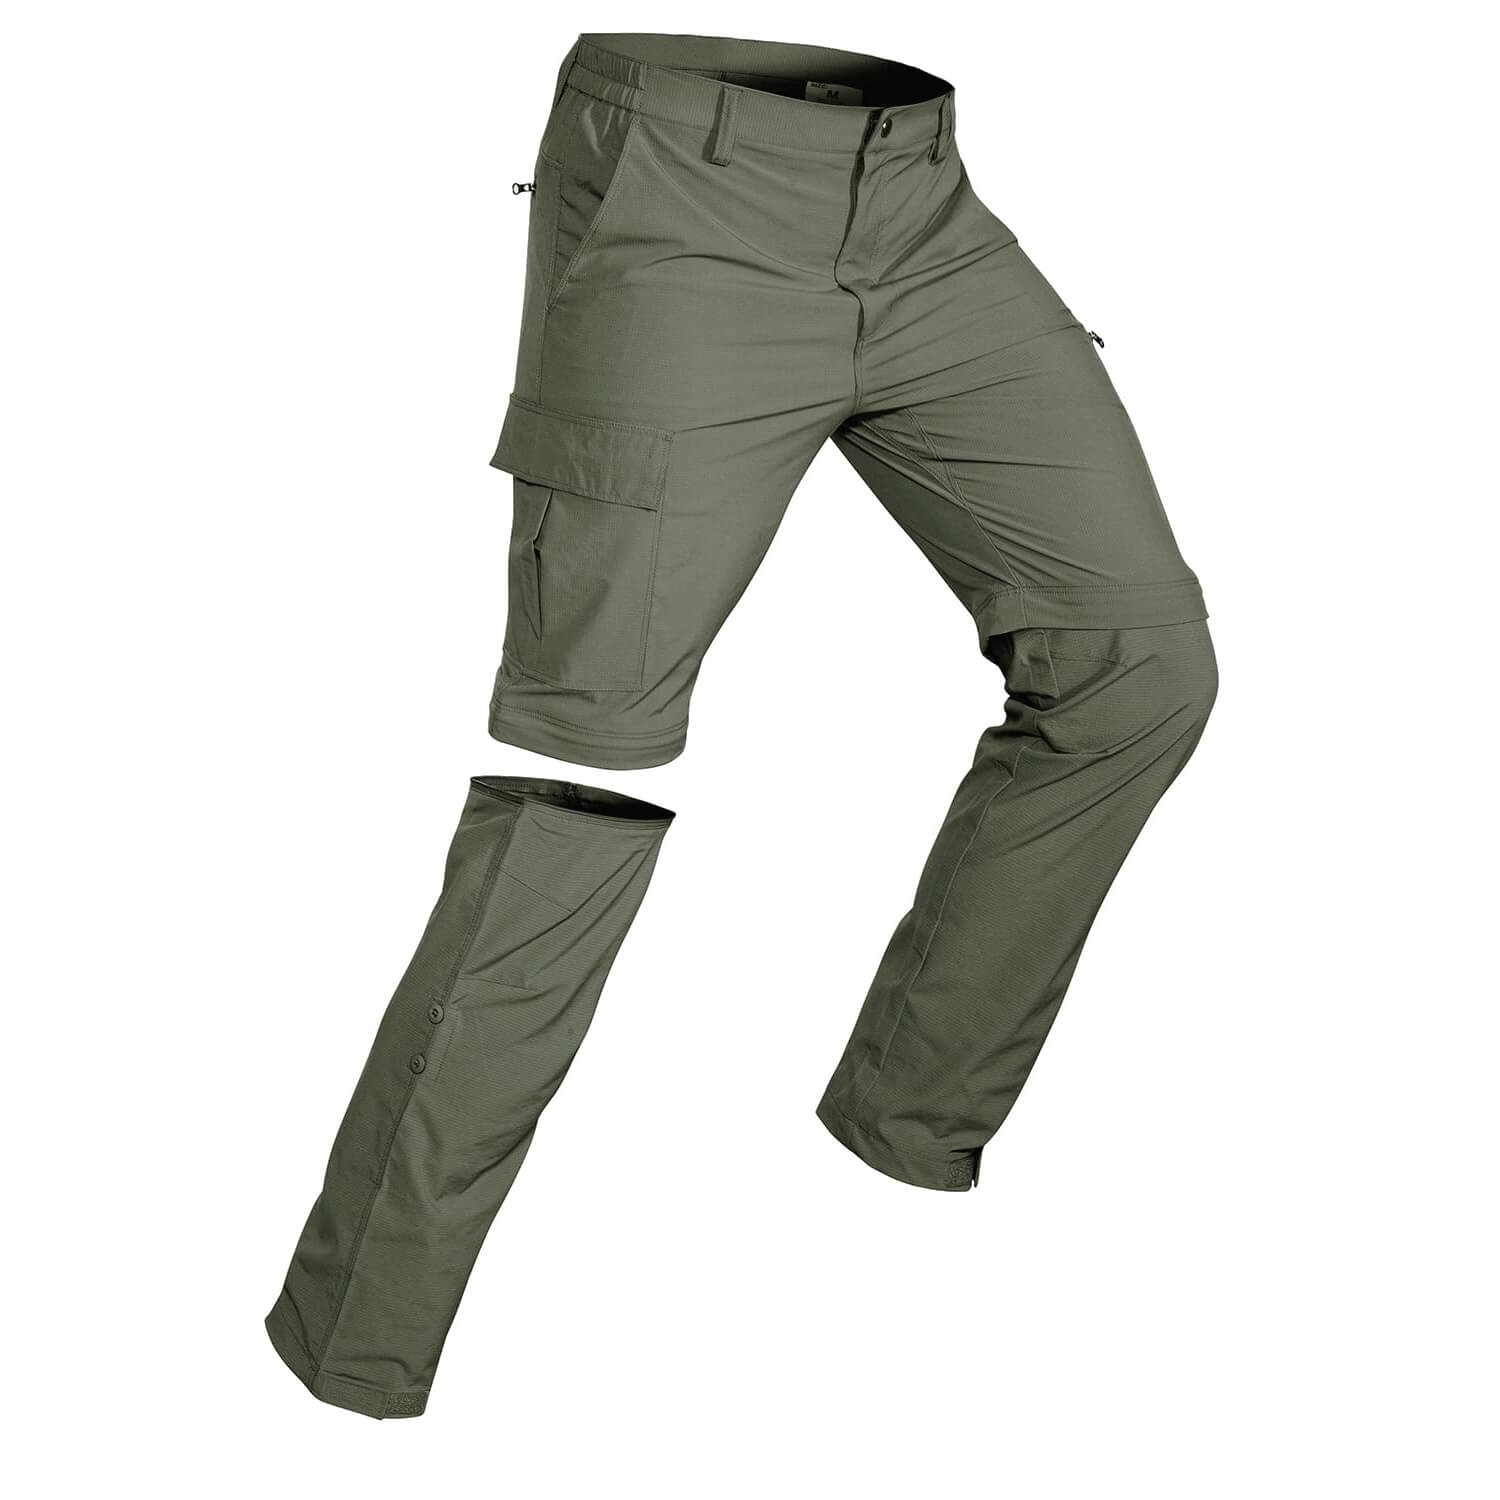 Herrnalise Men's Hiking Pants Convertible Quick Dry Lightweight